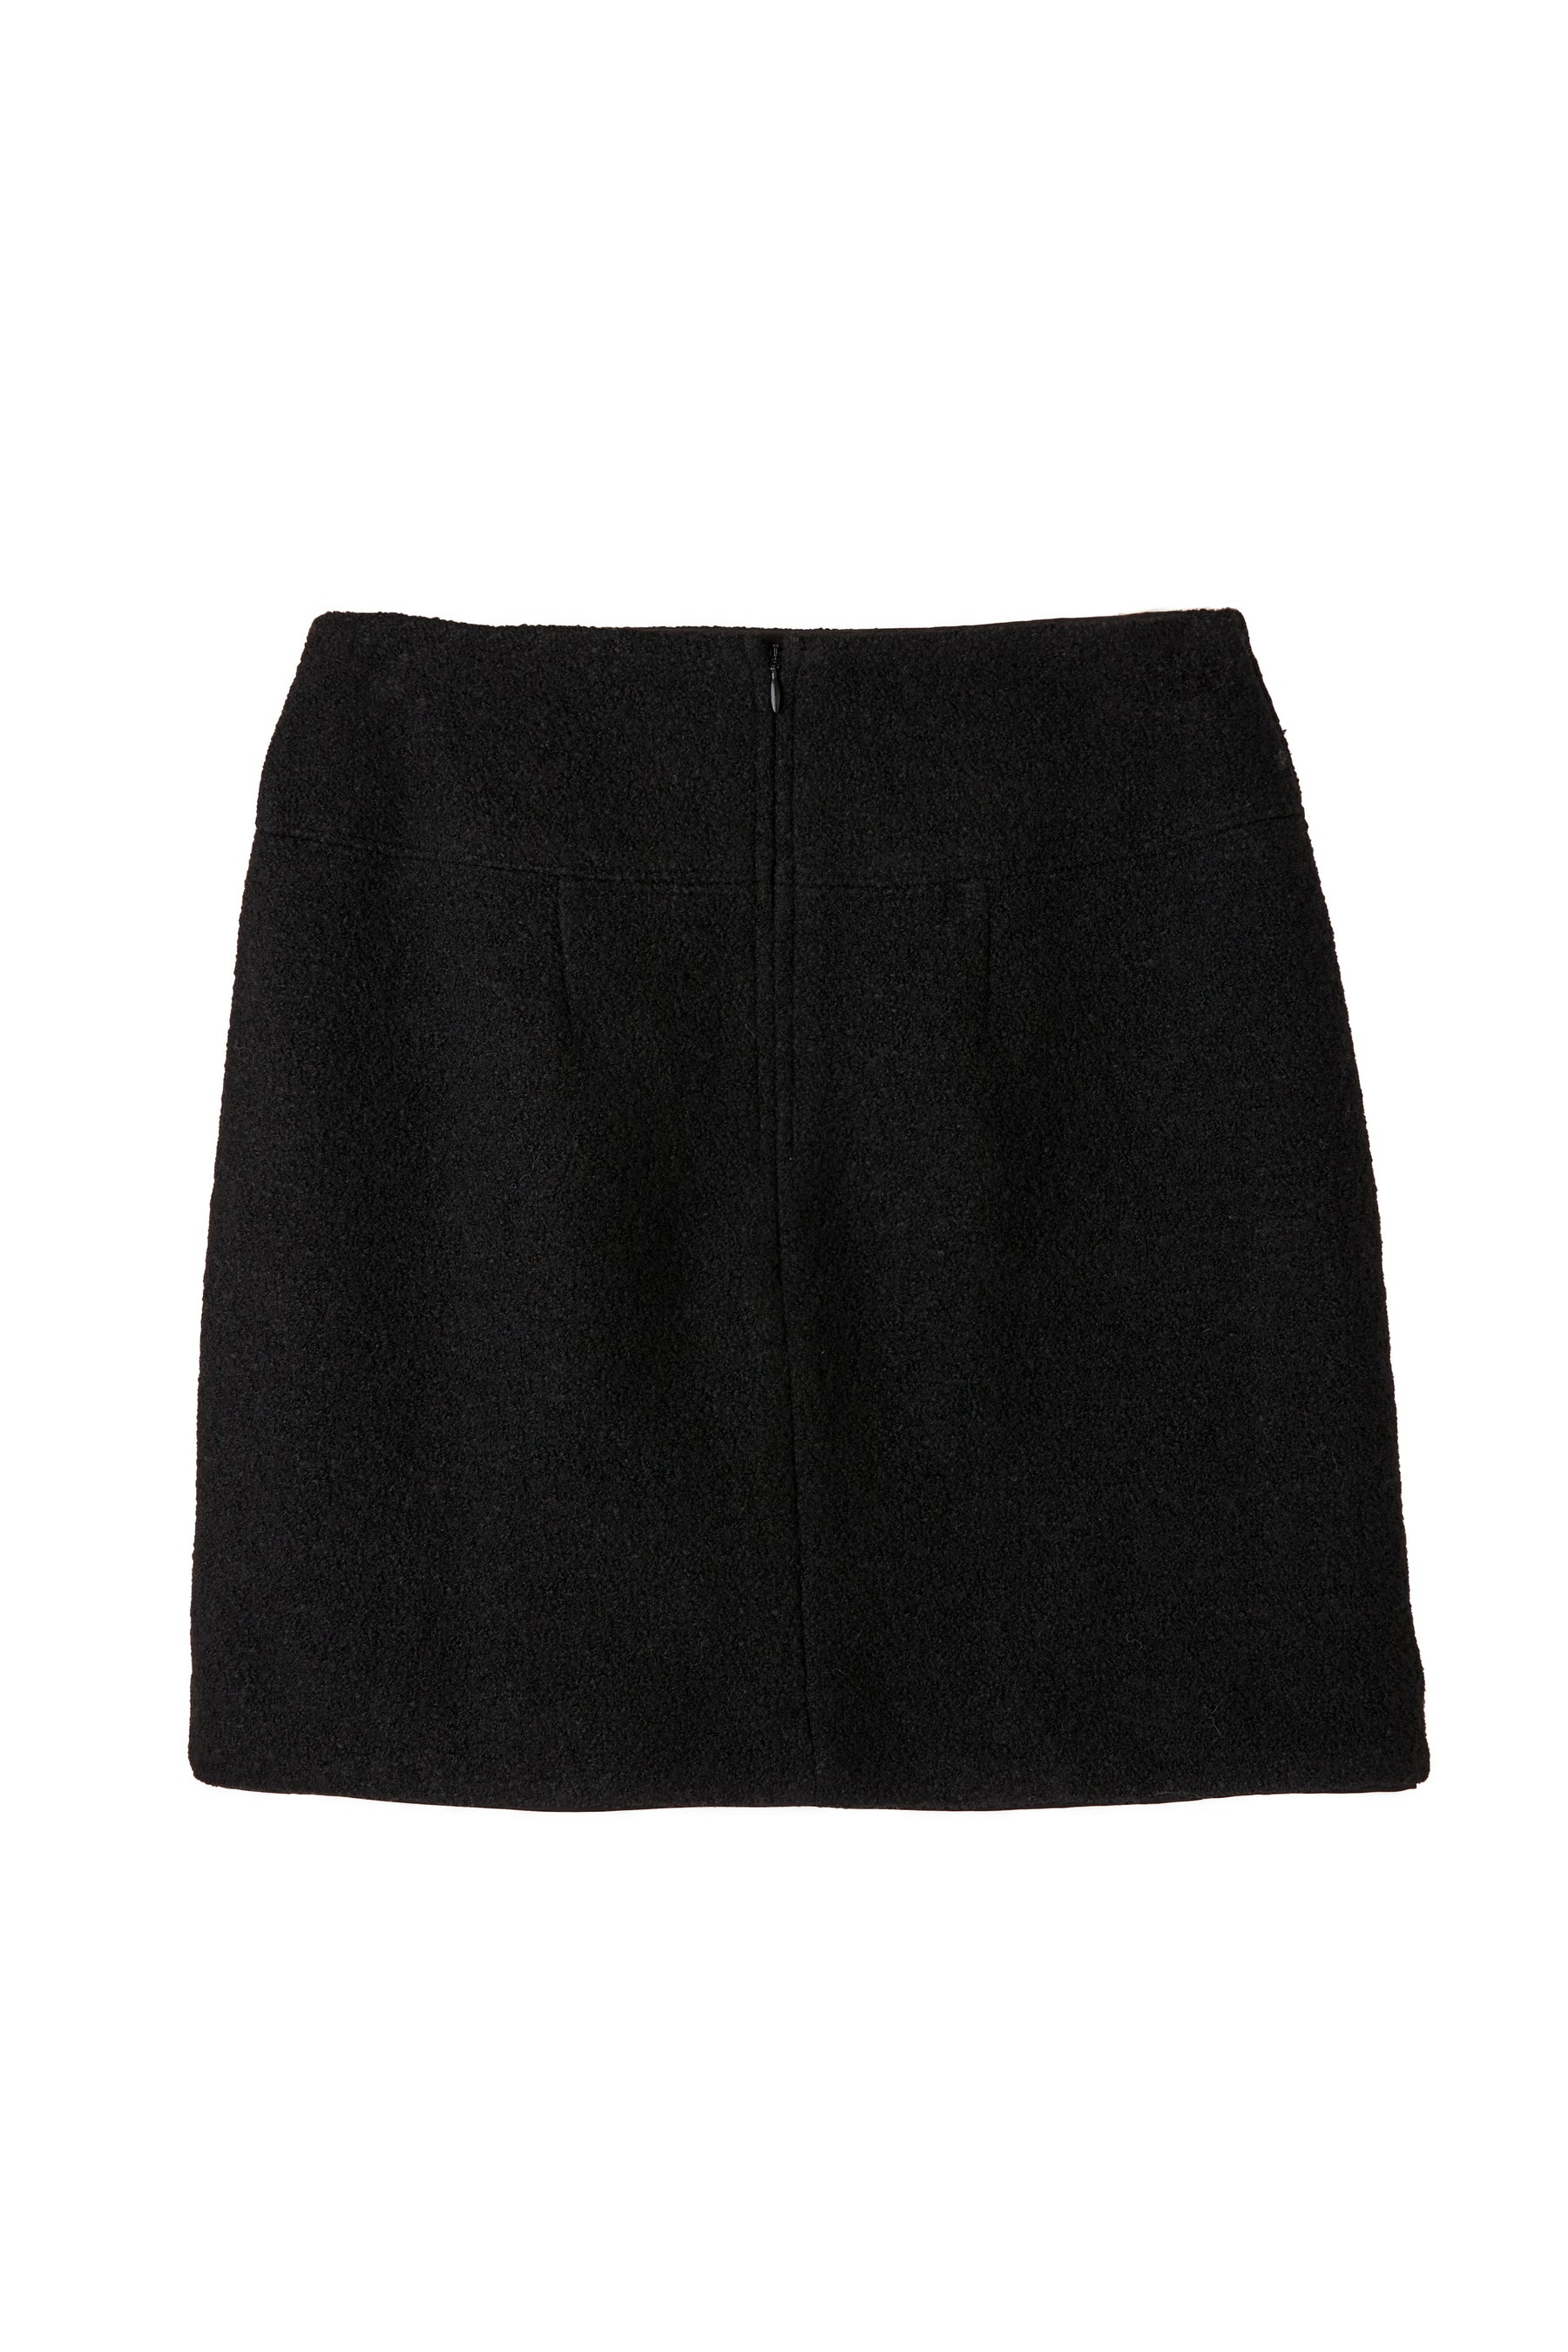 Hemingway Boucle Skirt